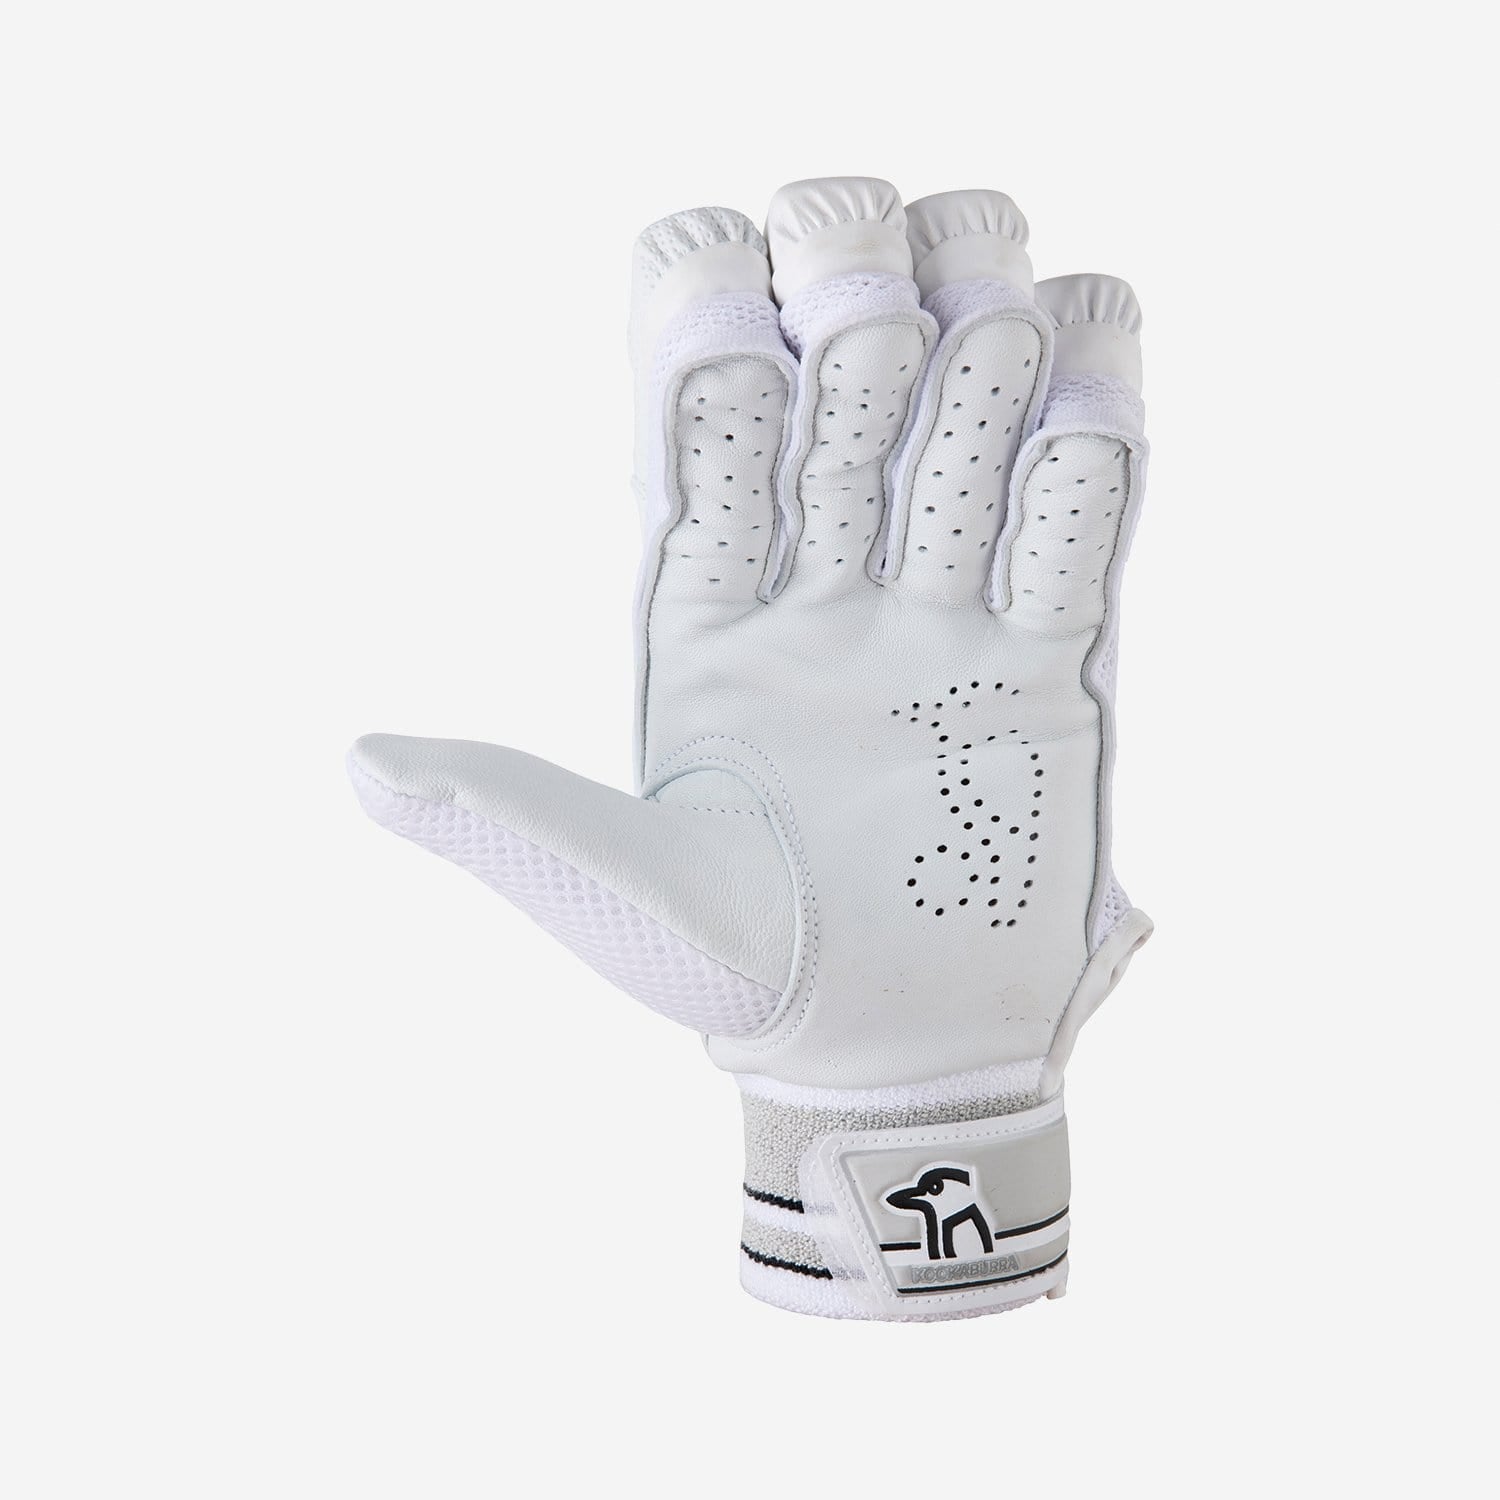 Kookaburra Gloves Kookaburra Ghost Pro 4.0 Cricket Batting Gloves